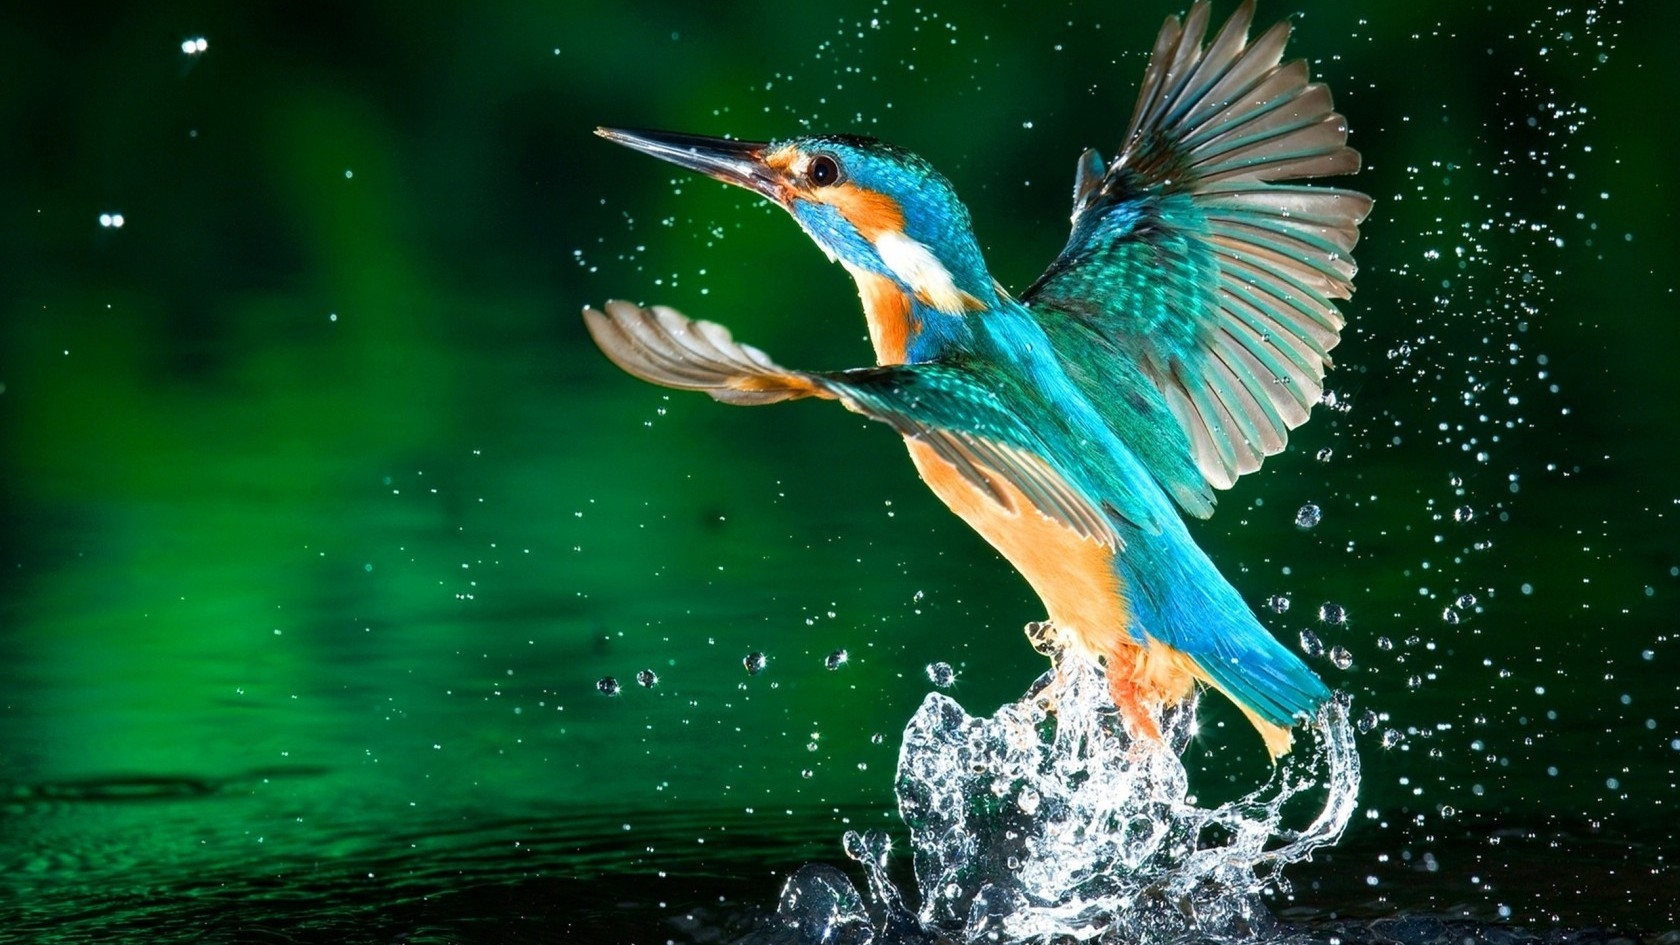 Kingfisher Bird for 1680 x 945 HDTV resolution